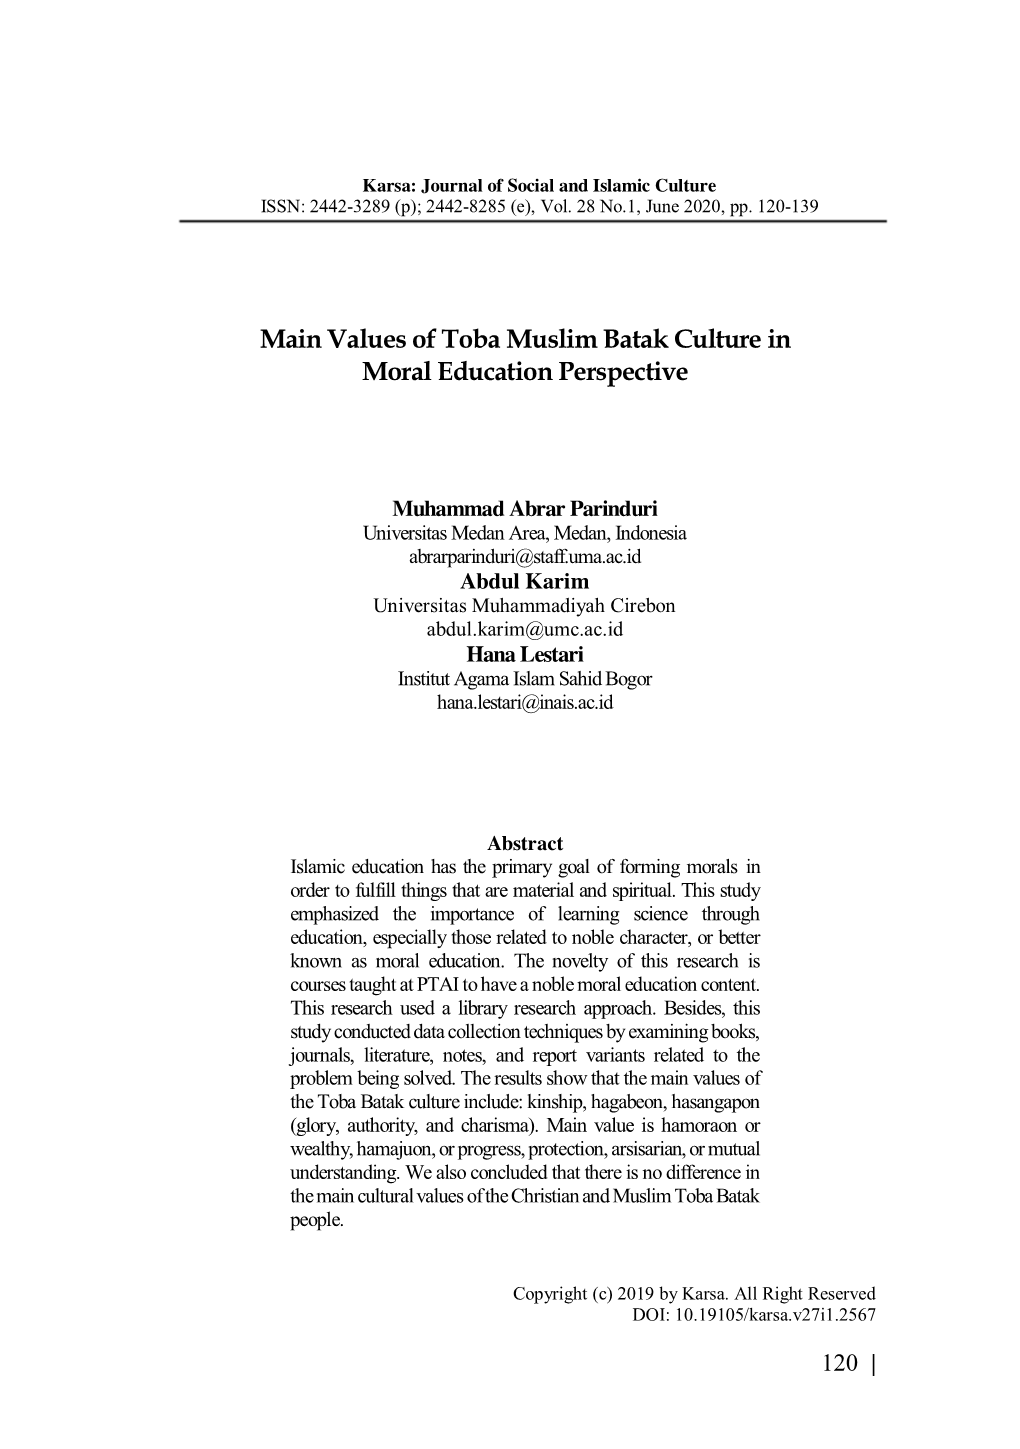 Values of Toba Muslim Batak Culture in Moral Education Perspective